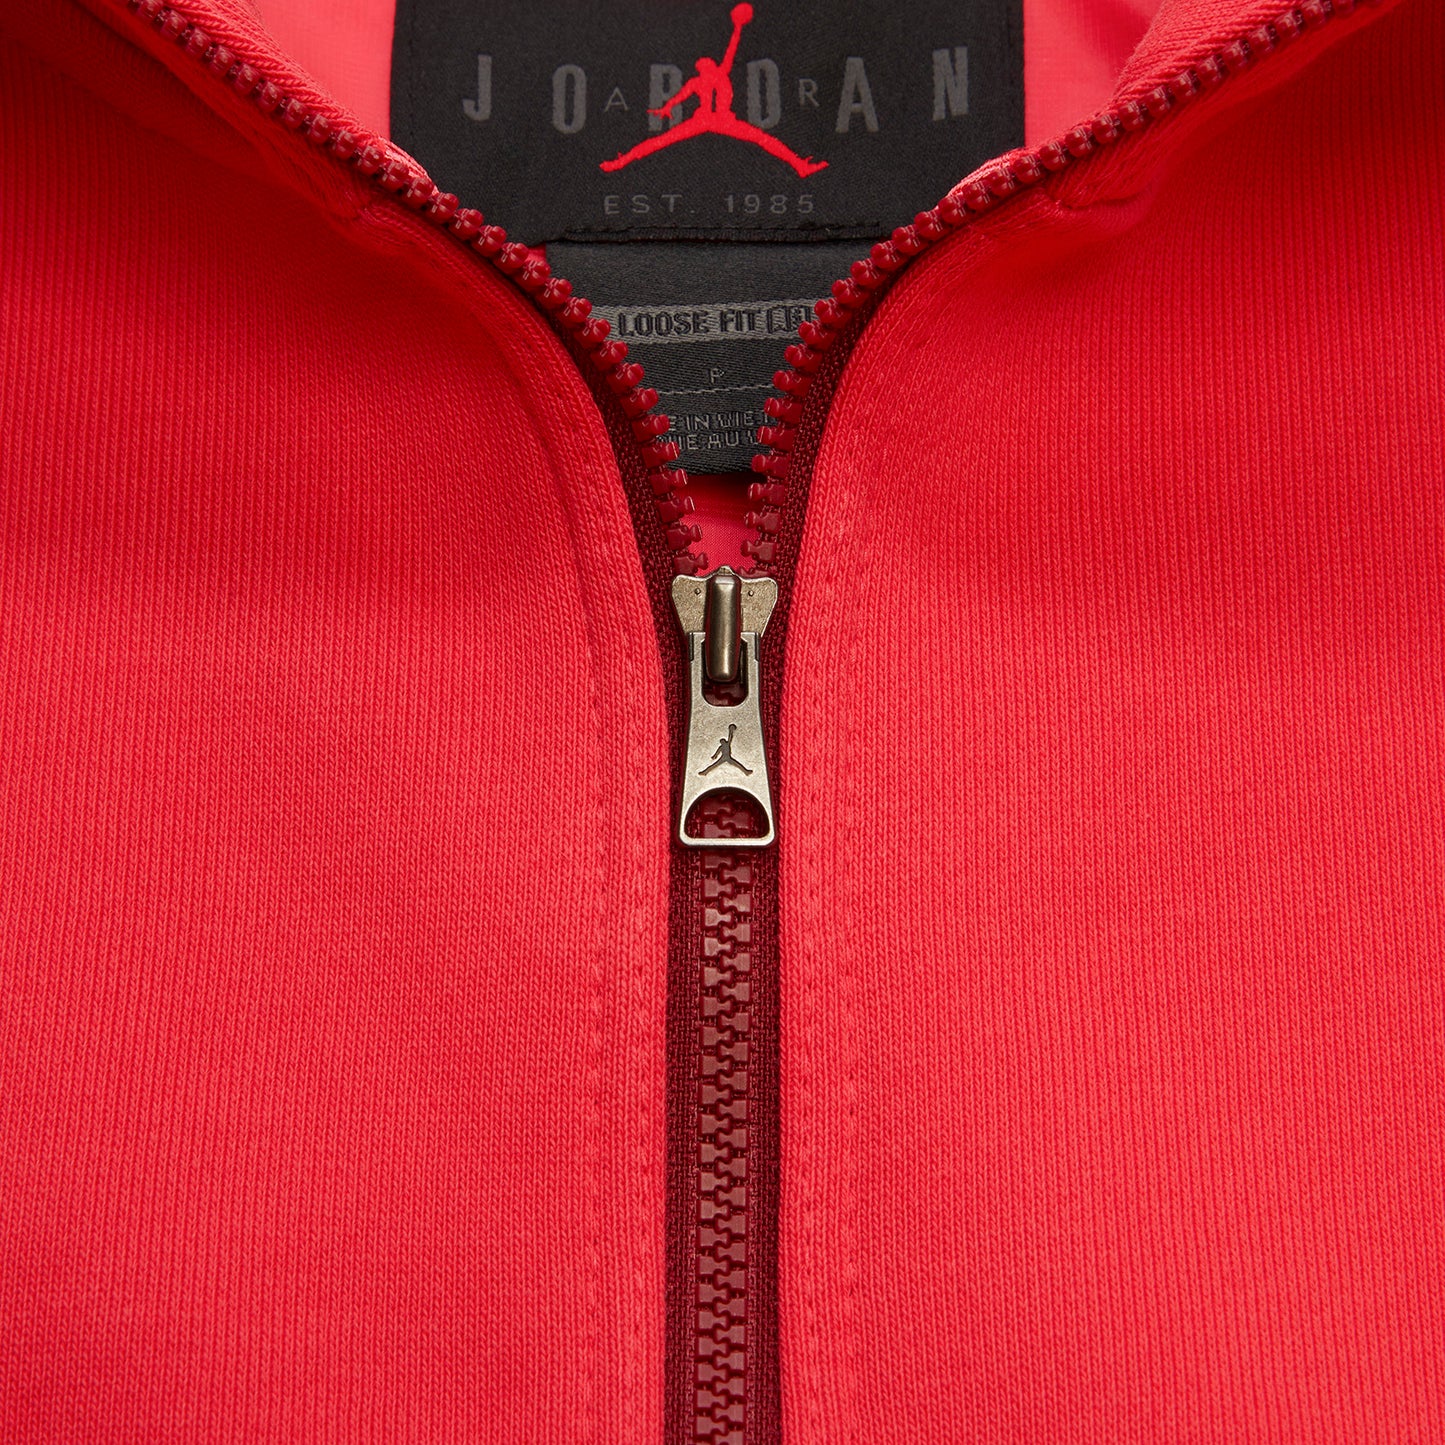 Jordan Womens 23 Engineered Jacket (Light Fusion Red/Pomegranate/Mystic Dates)